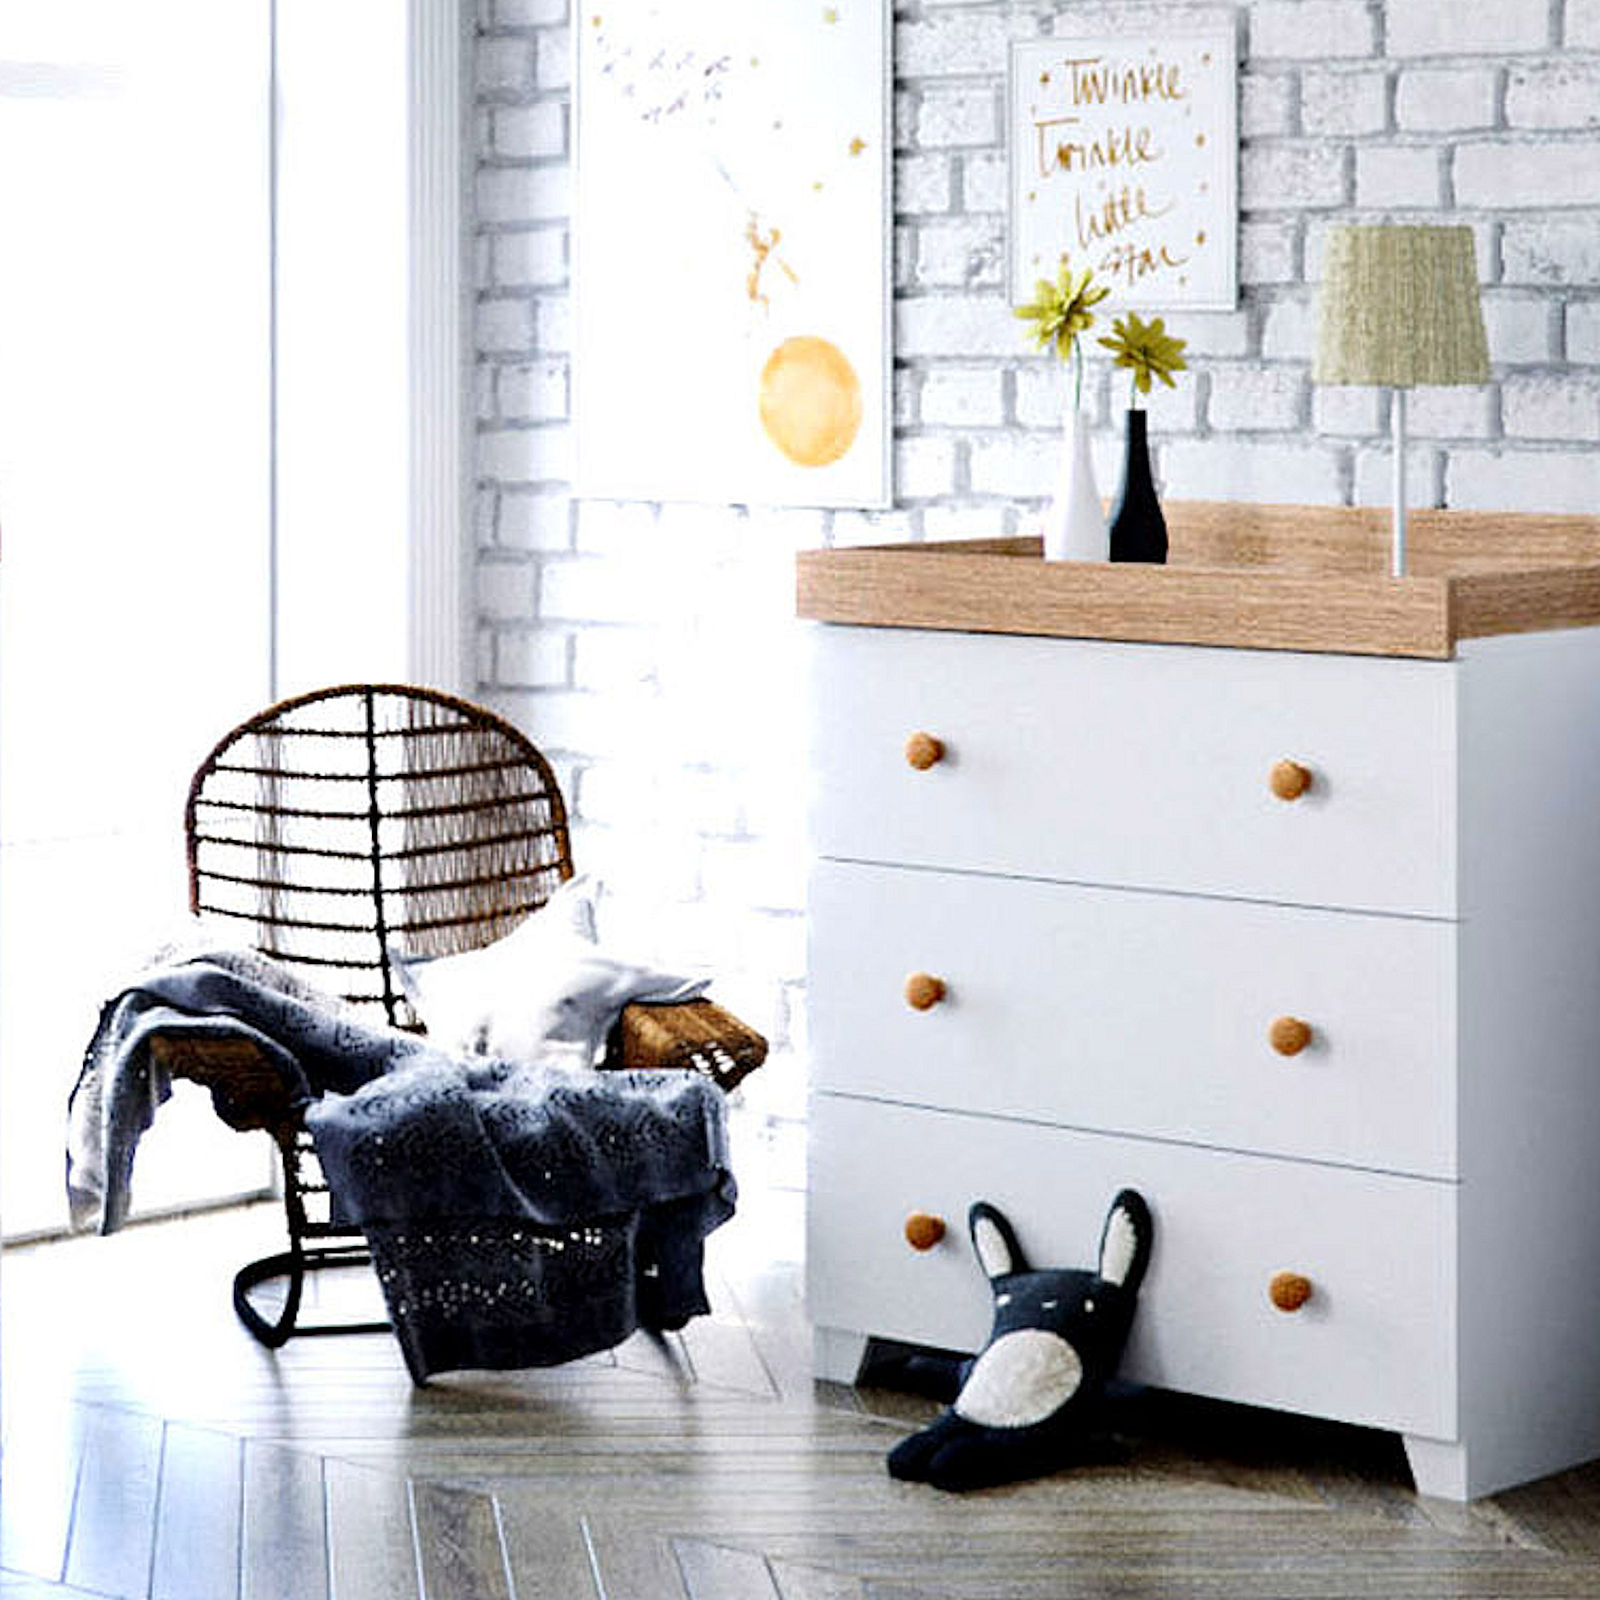 Little Acorns Classic Milano Dresser & Changing Table - White & Oak